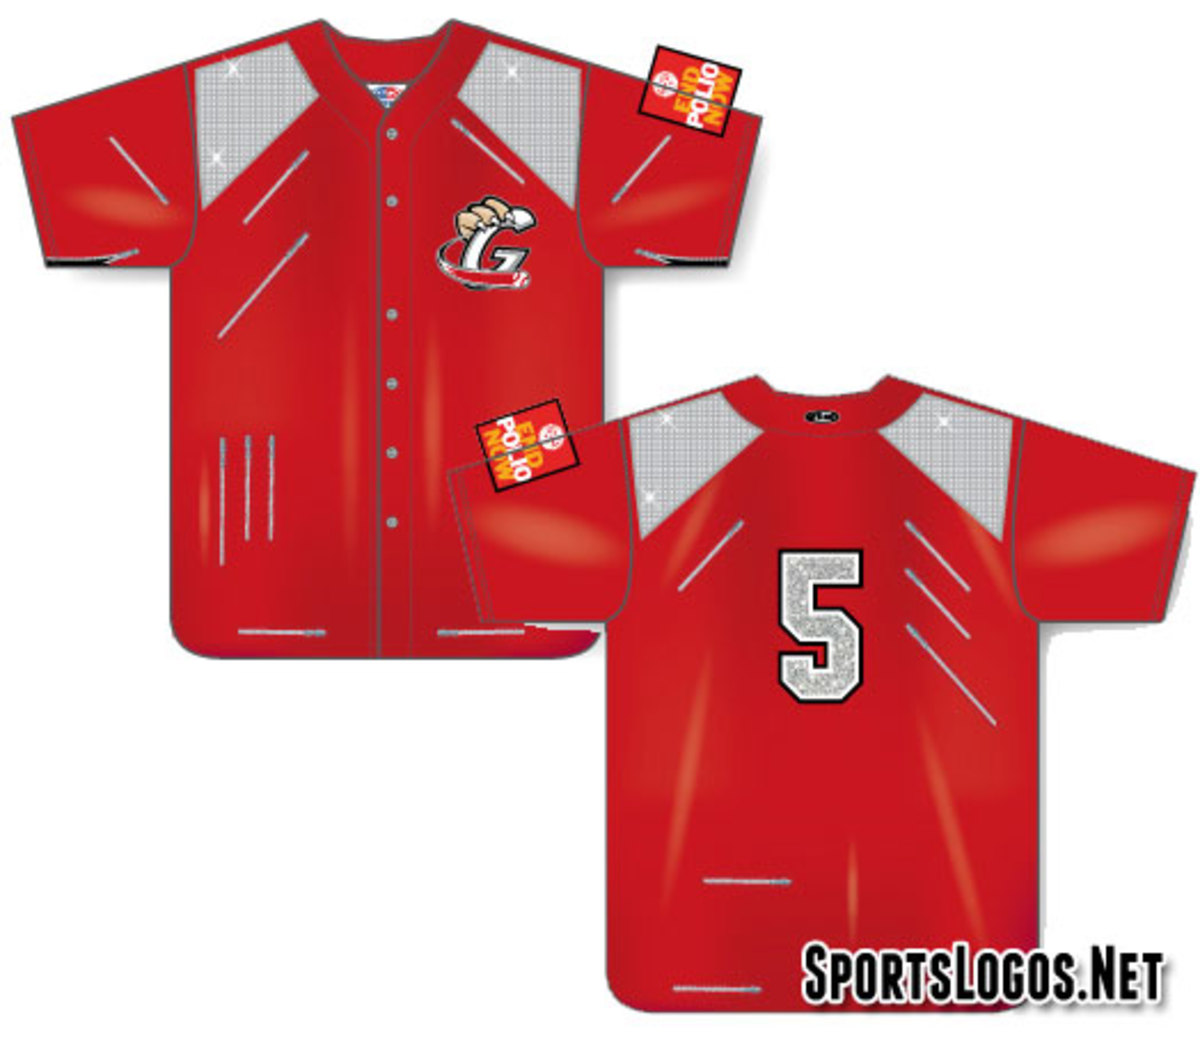 Minor League Baseball Team to Wear Michael Jackson-Themed Uniforms